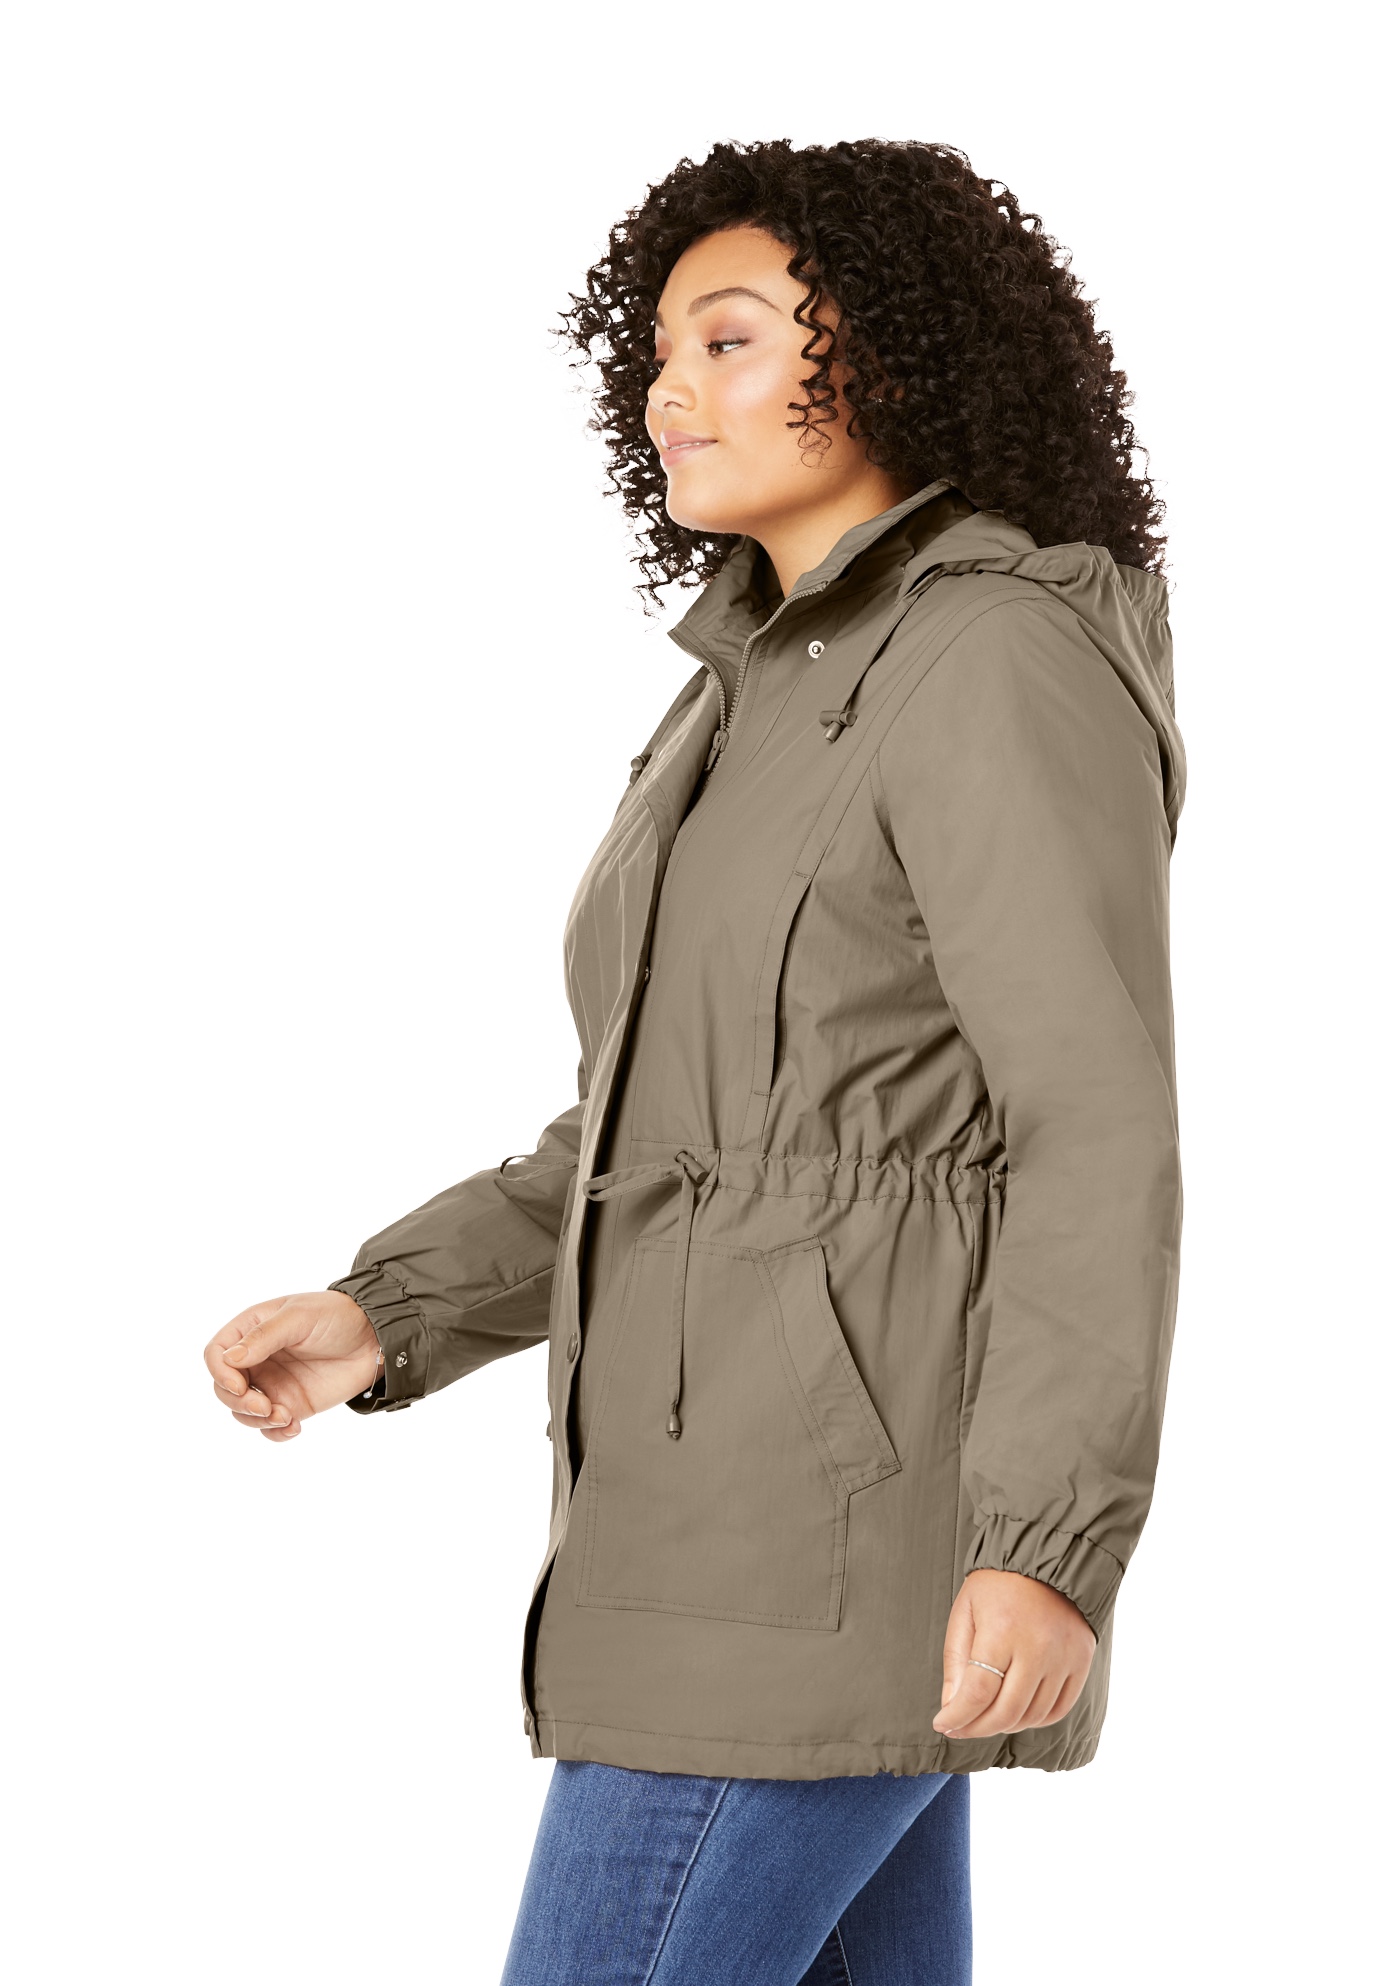 Woman Within Women's Plus Size Fleece-Lined Taslon Anorak Rain Jacket - image 4 of 6